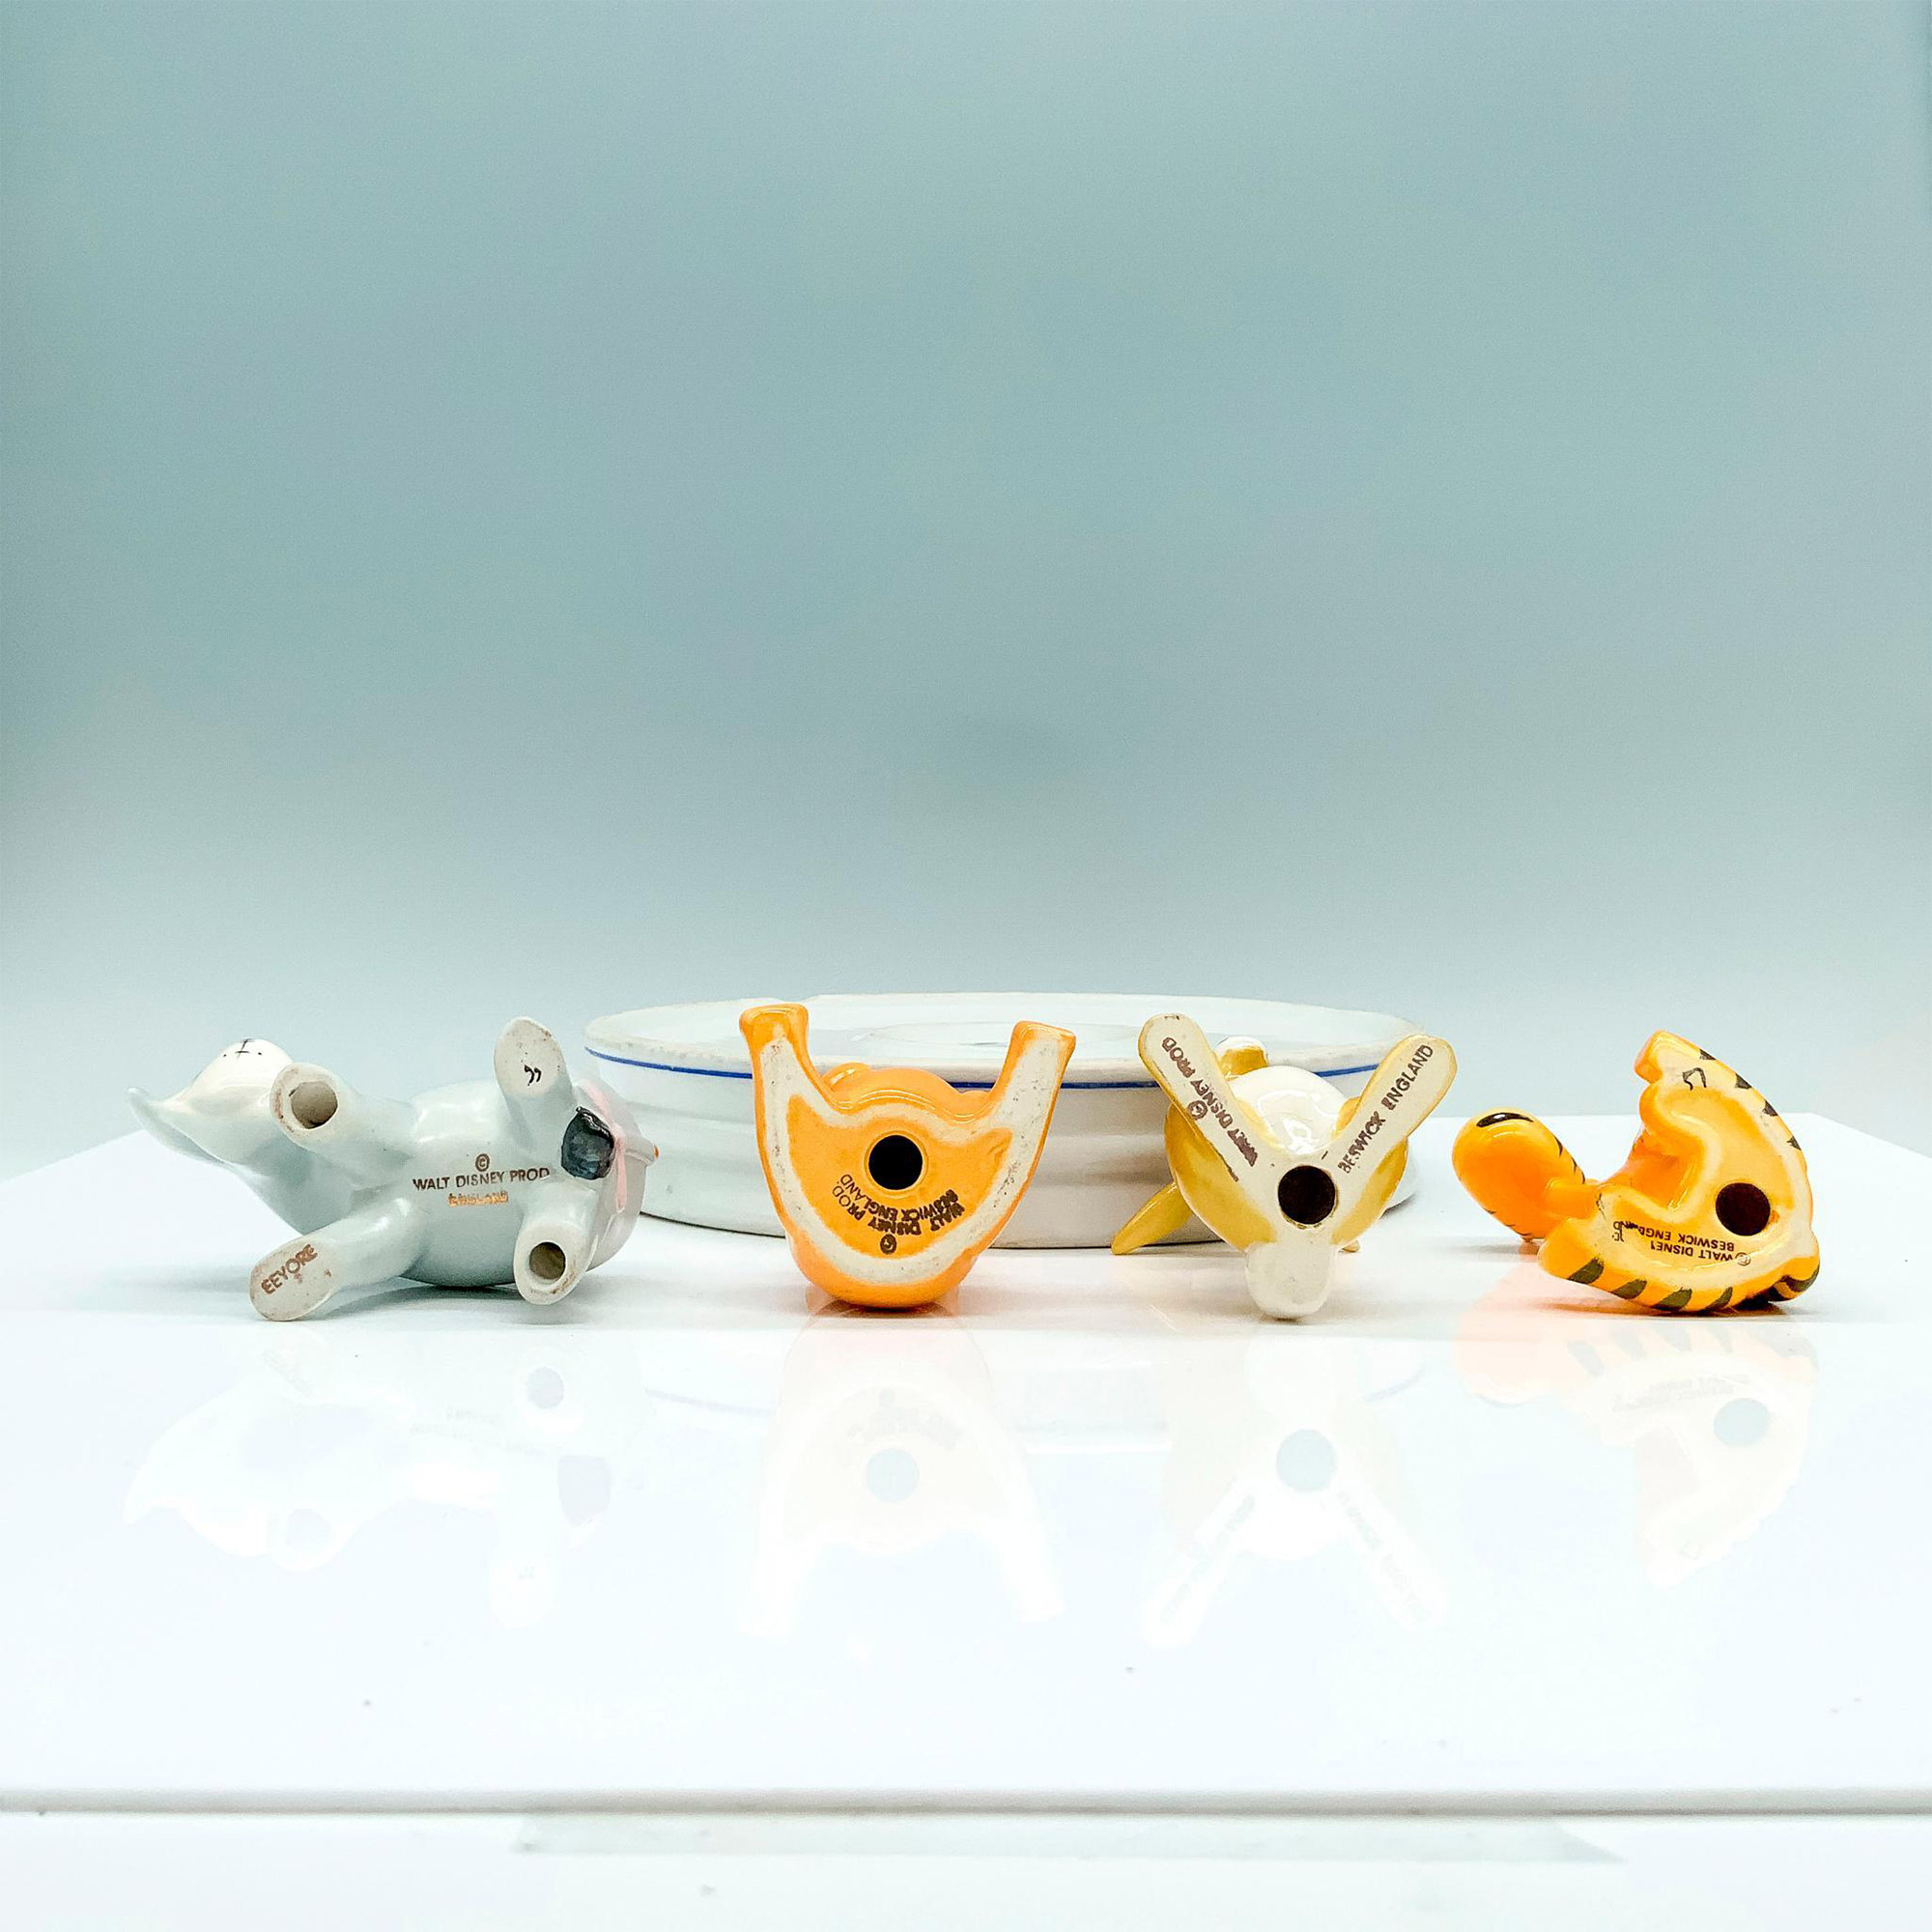 5pc Winnie the Pooh Beswick Figurines and Oatmeal Bowl Set - Image 4 of 4